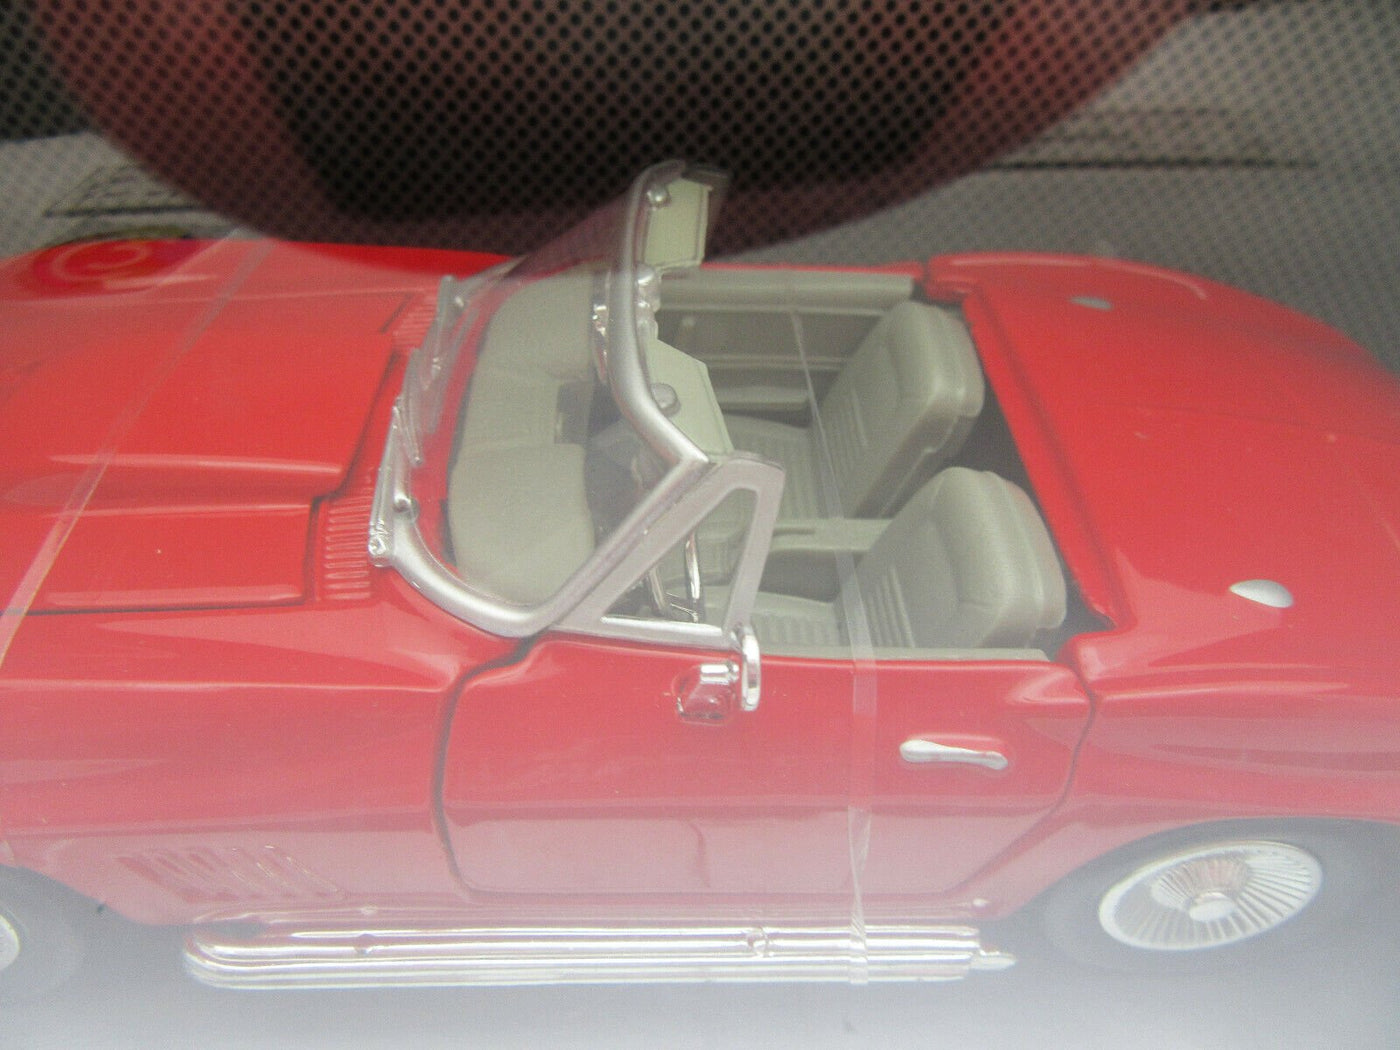 1967 Chevrolet Corvette ~ Red ~ Metal Die Cast Car ~ American Legends ~ 1:24